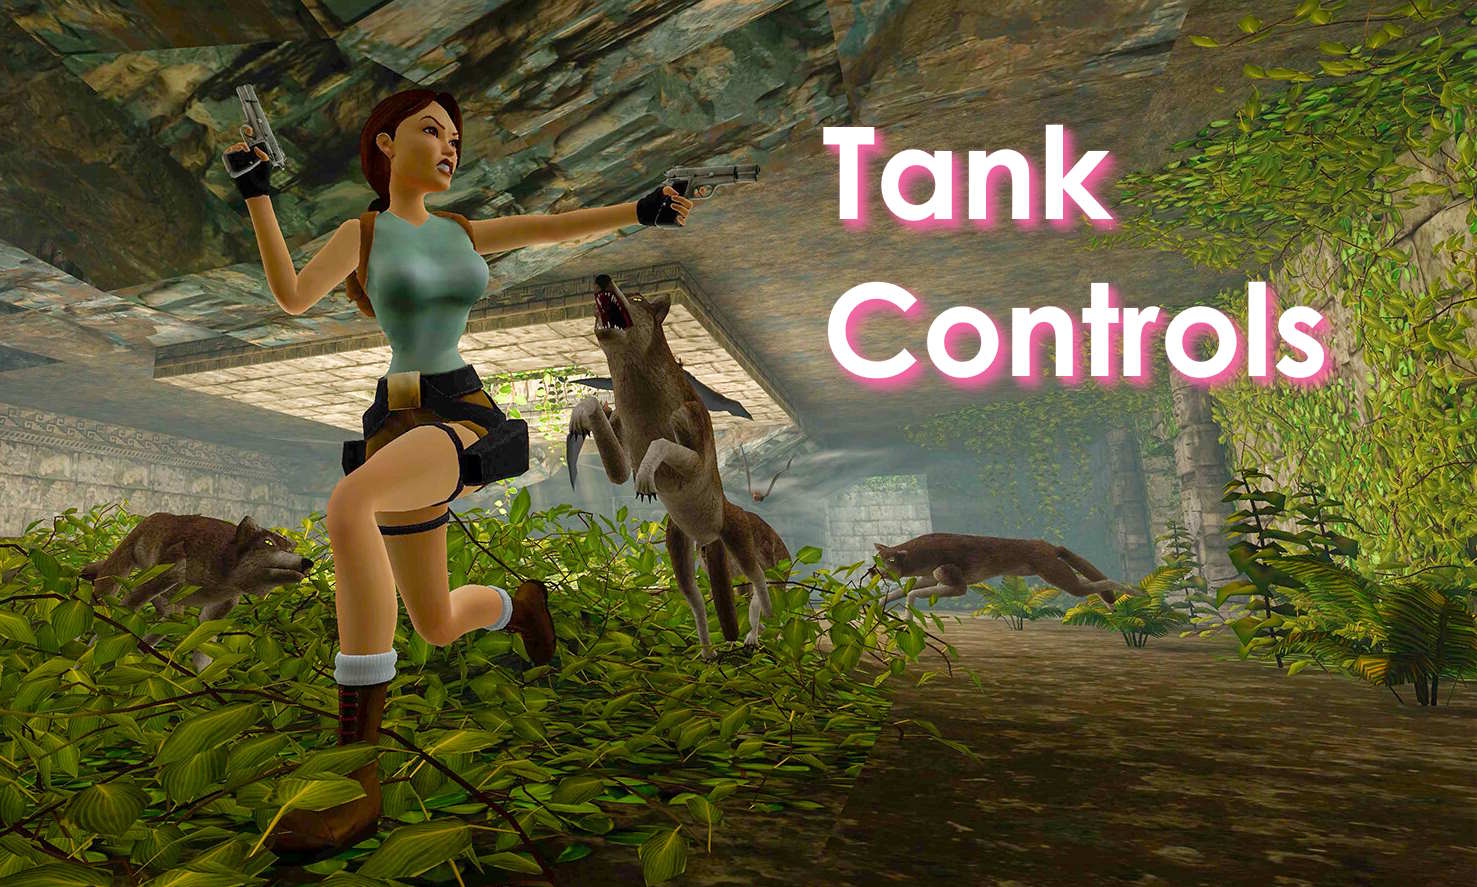 Tank controls